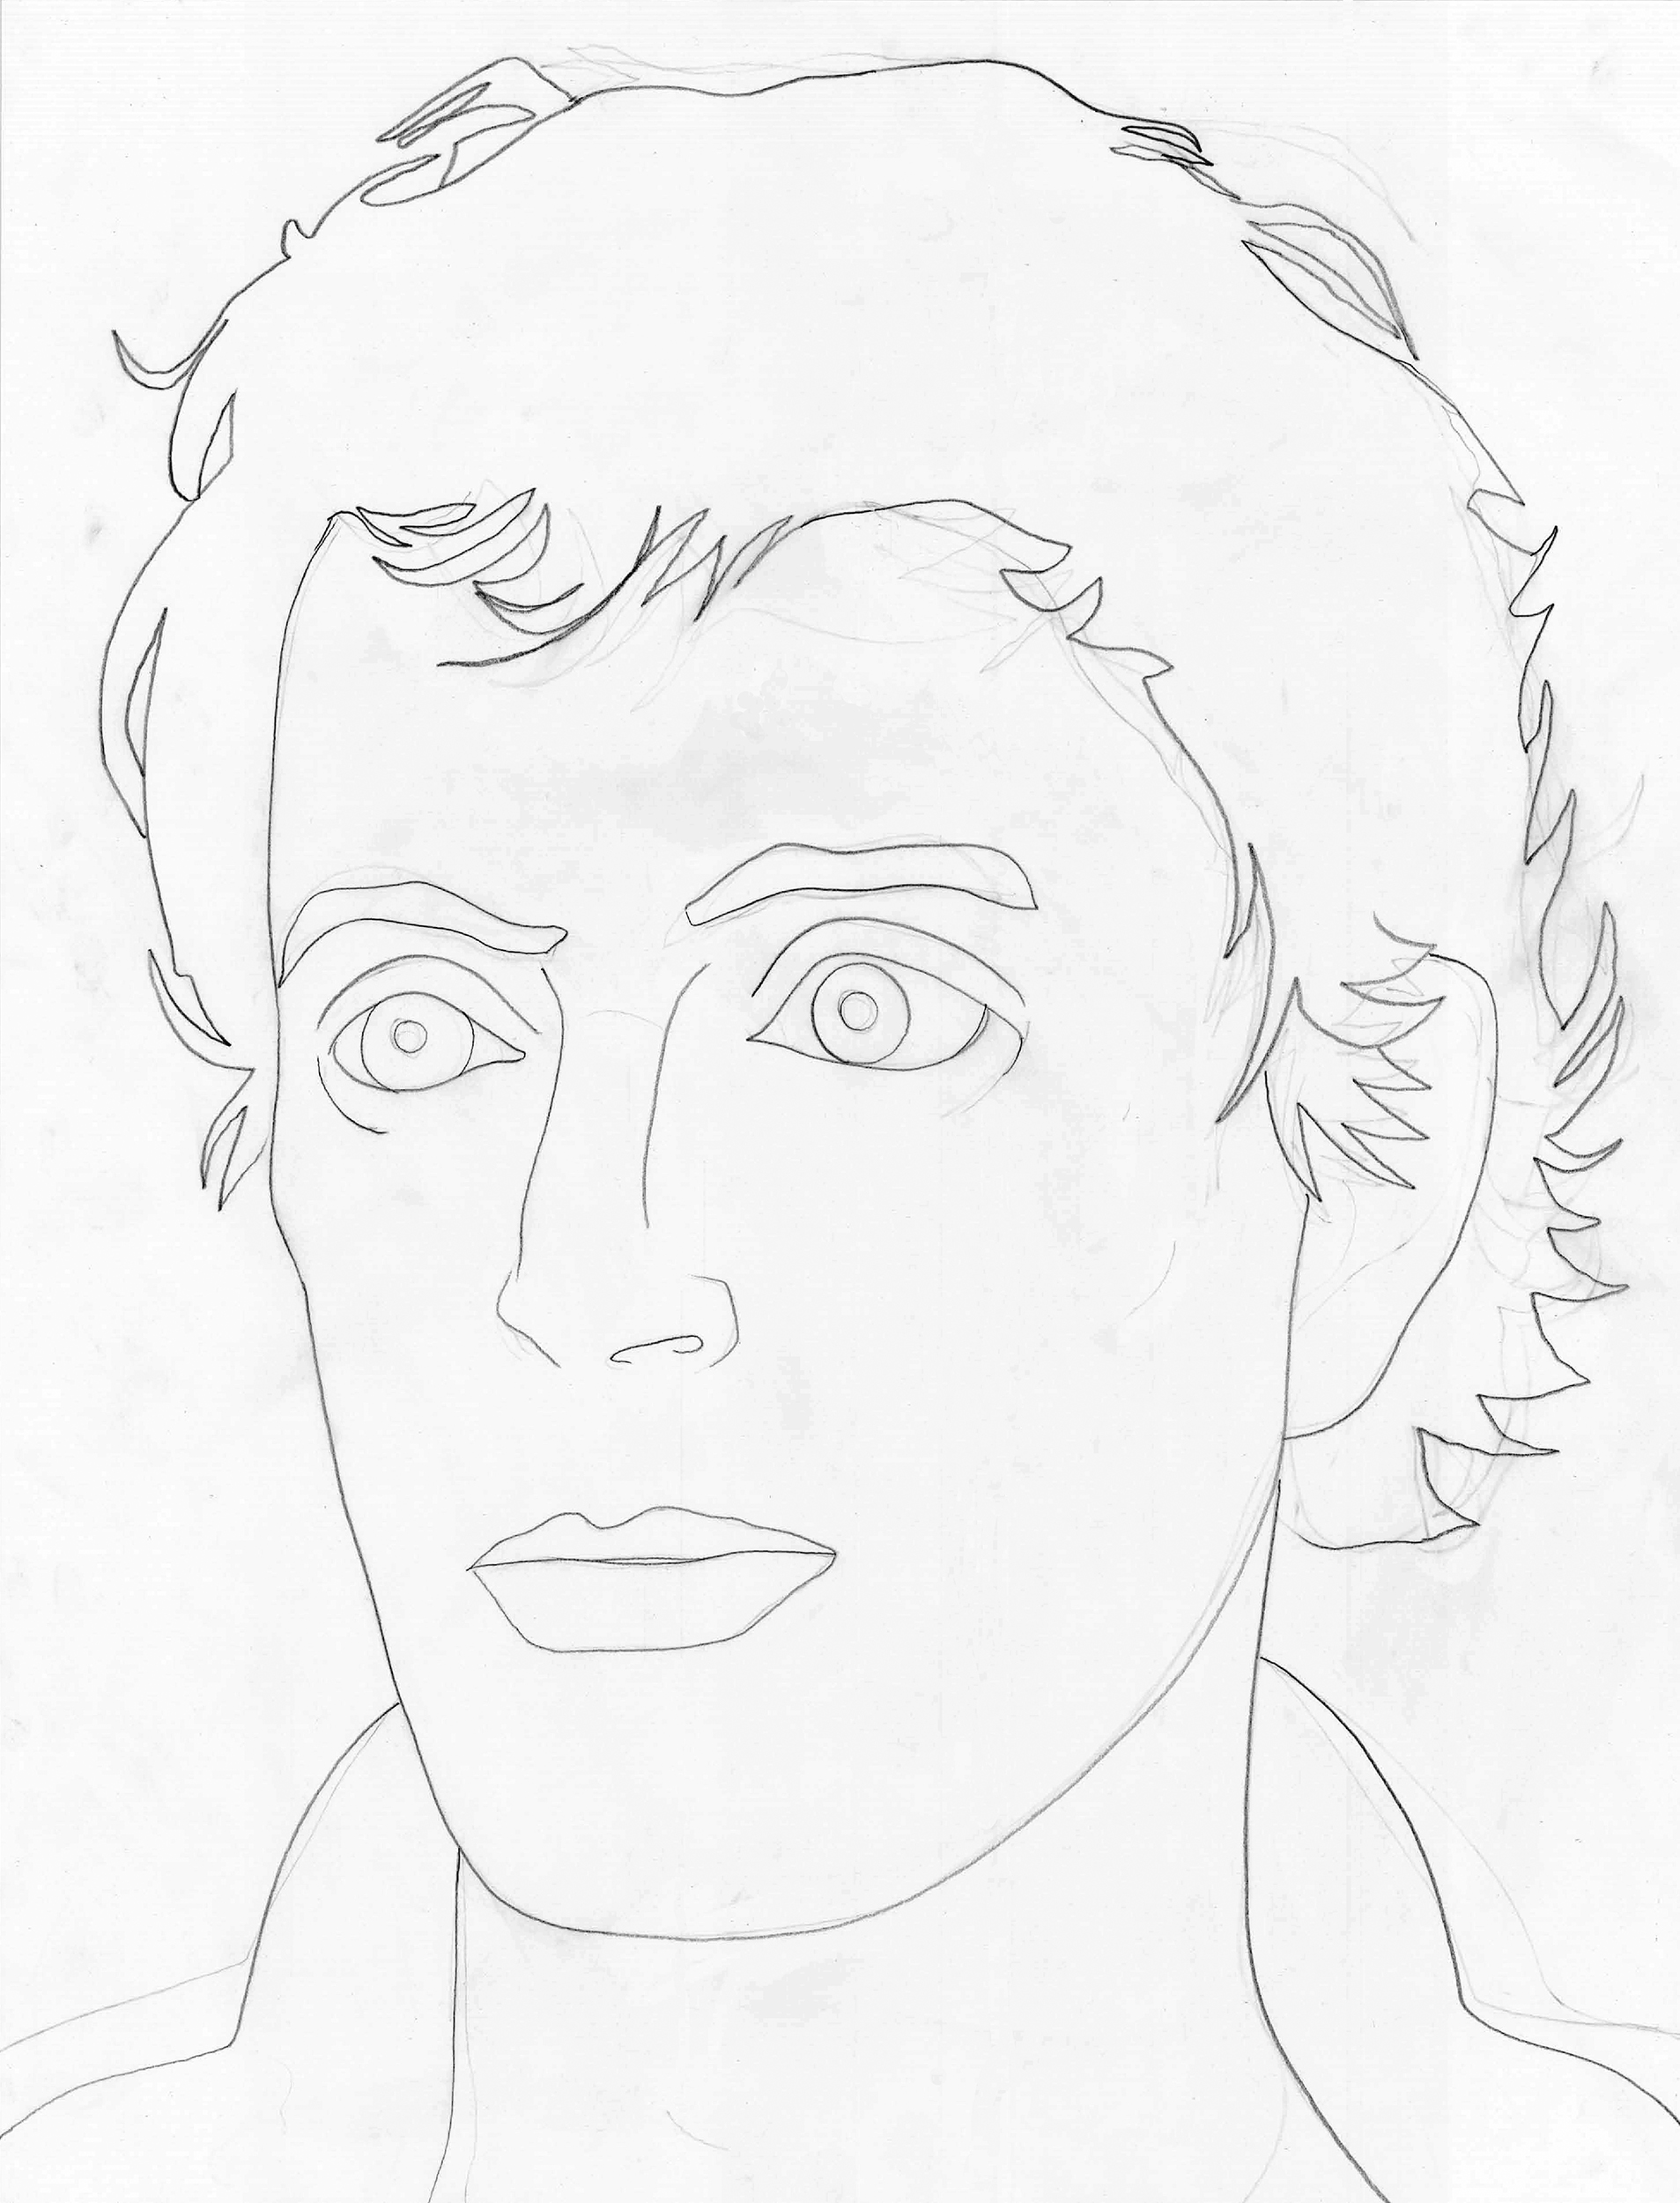 Self-portrait, drawing by Wouter van Riessen